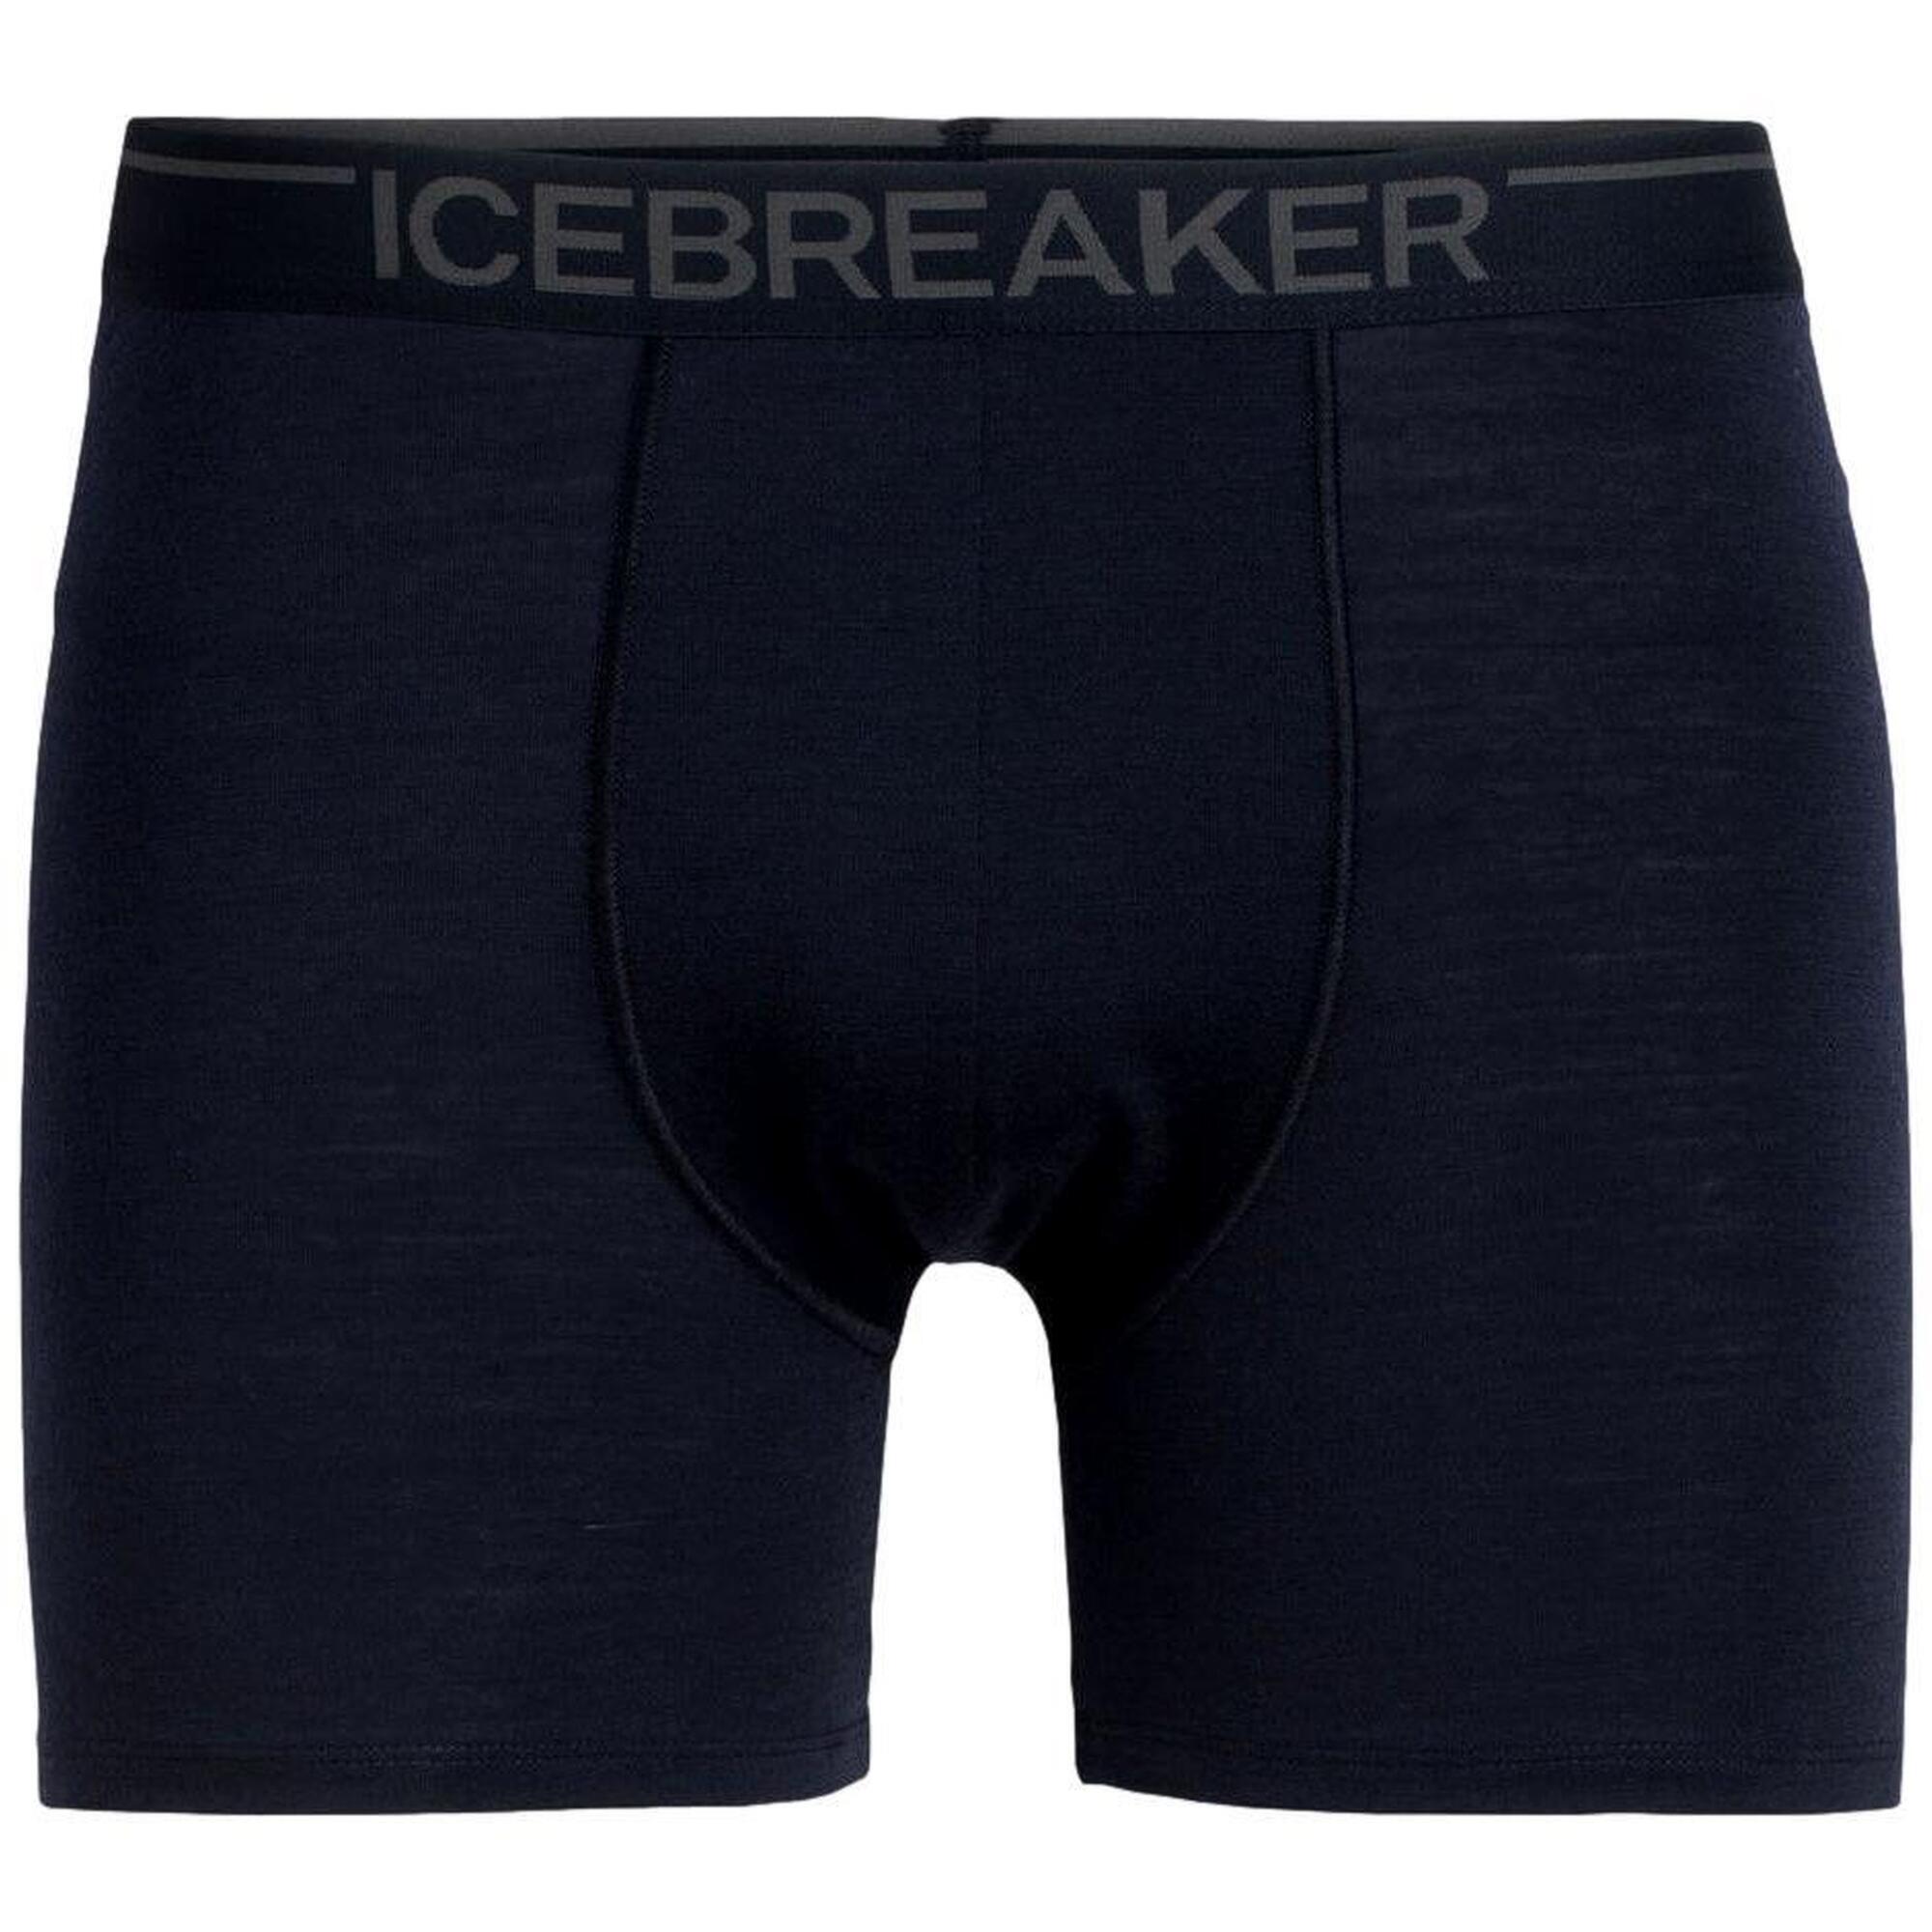 ICEBREAKER Icebreaker Merino Anatomica Boxer Shorts - Midnight Navy